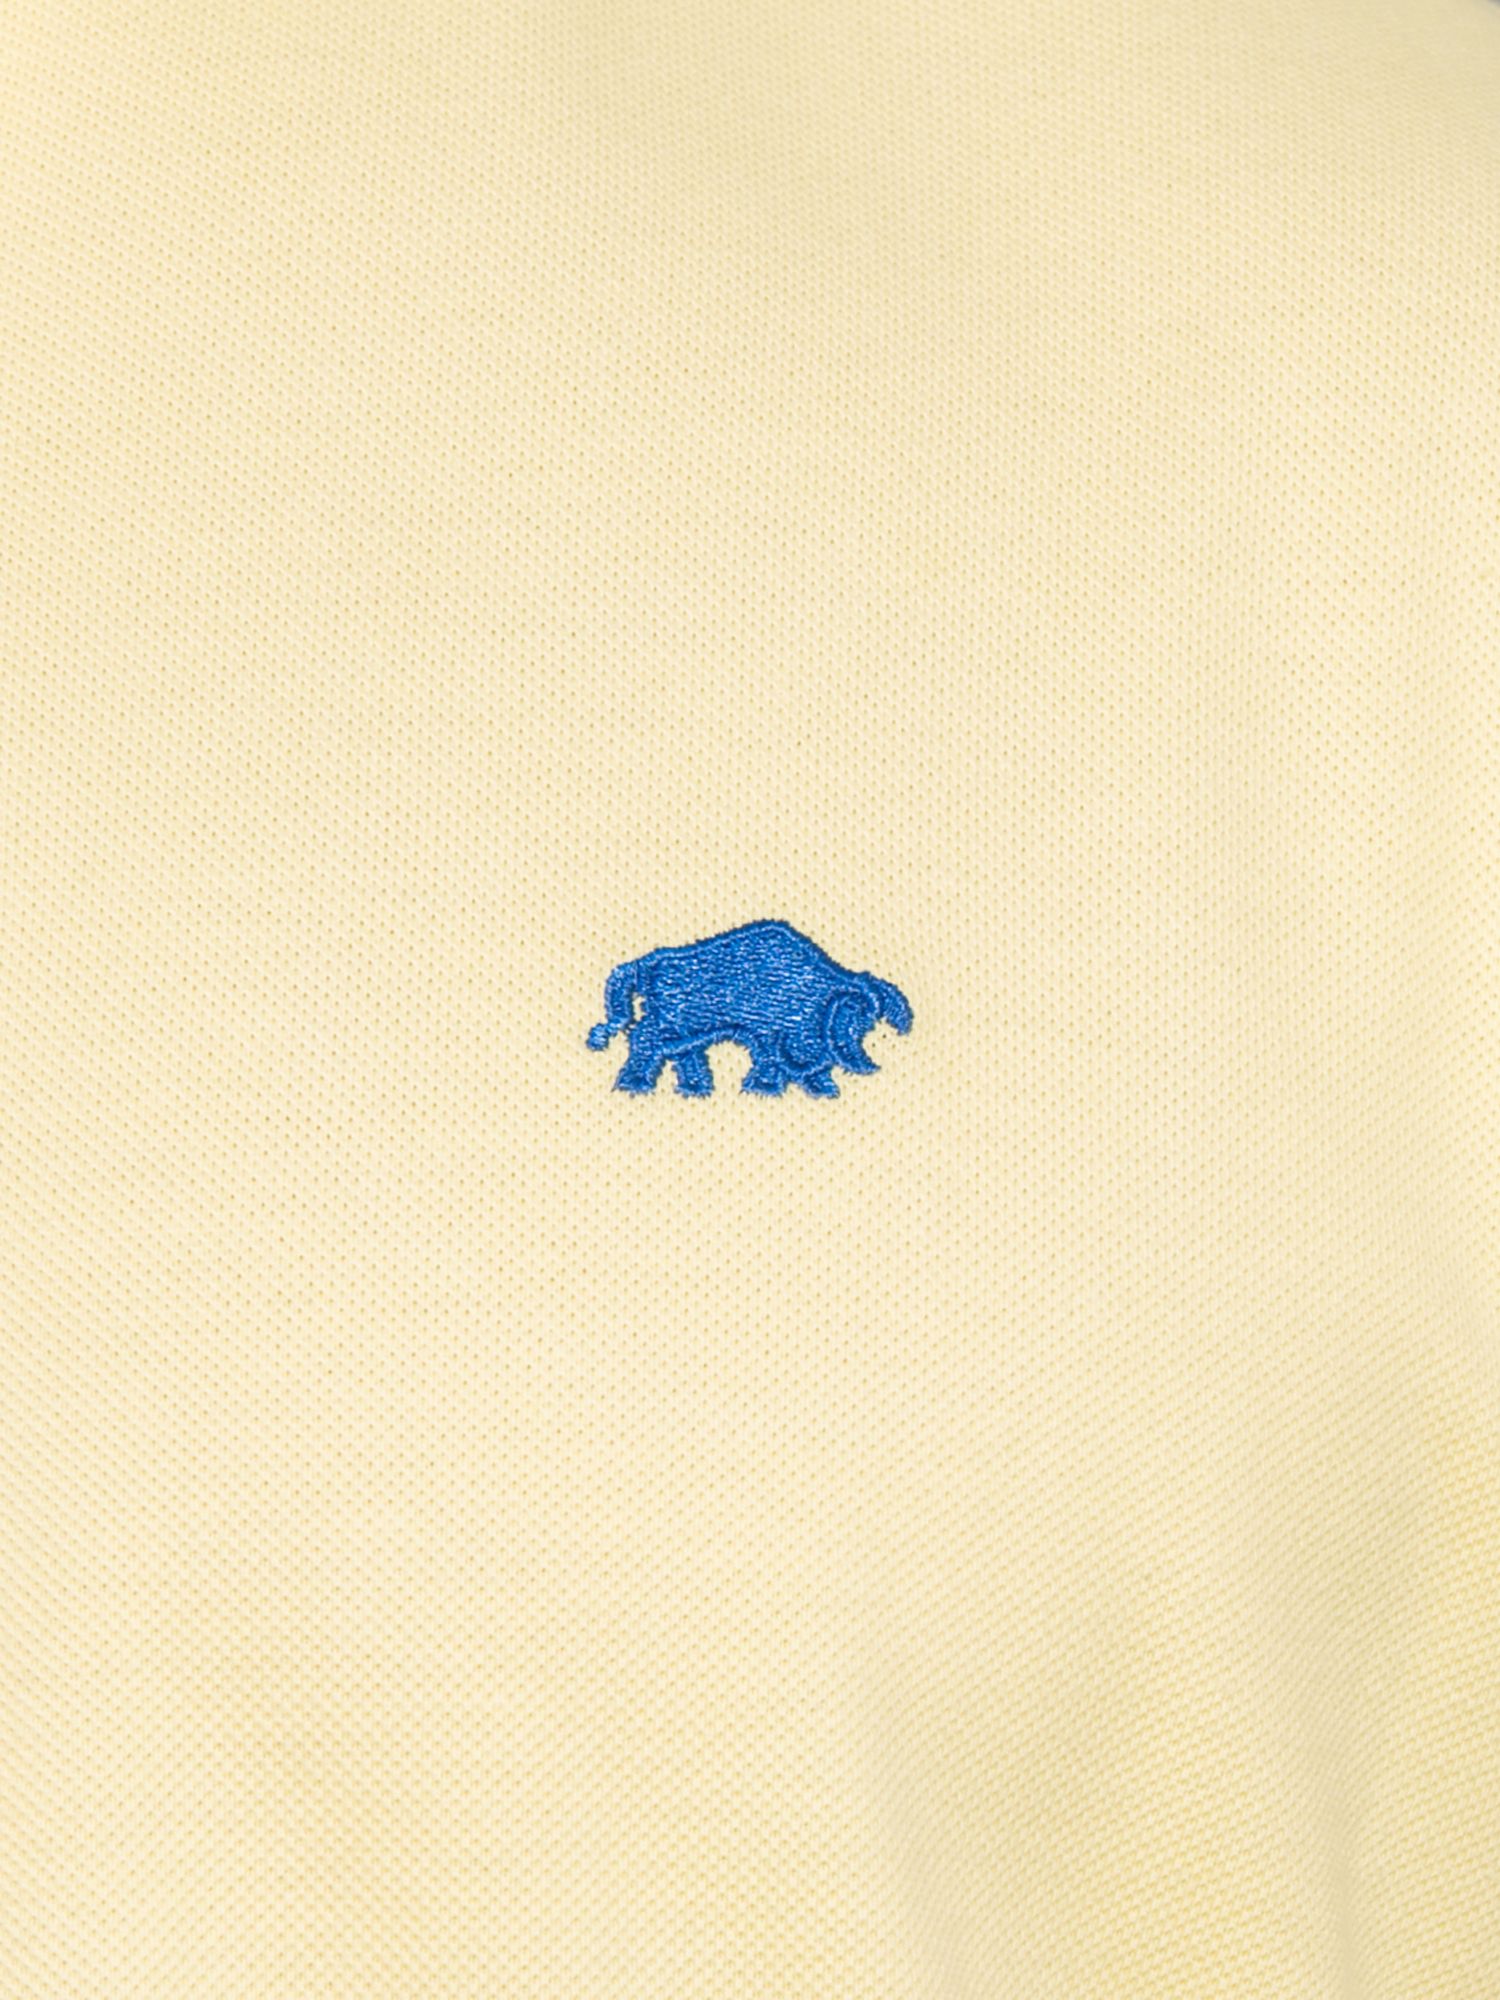 Buy Raging Bull Classic Organic Cotton Pique Polo Shirt Online at johnlewis.com